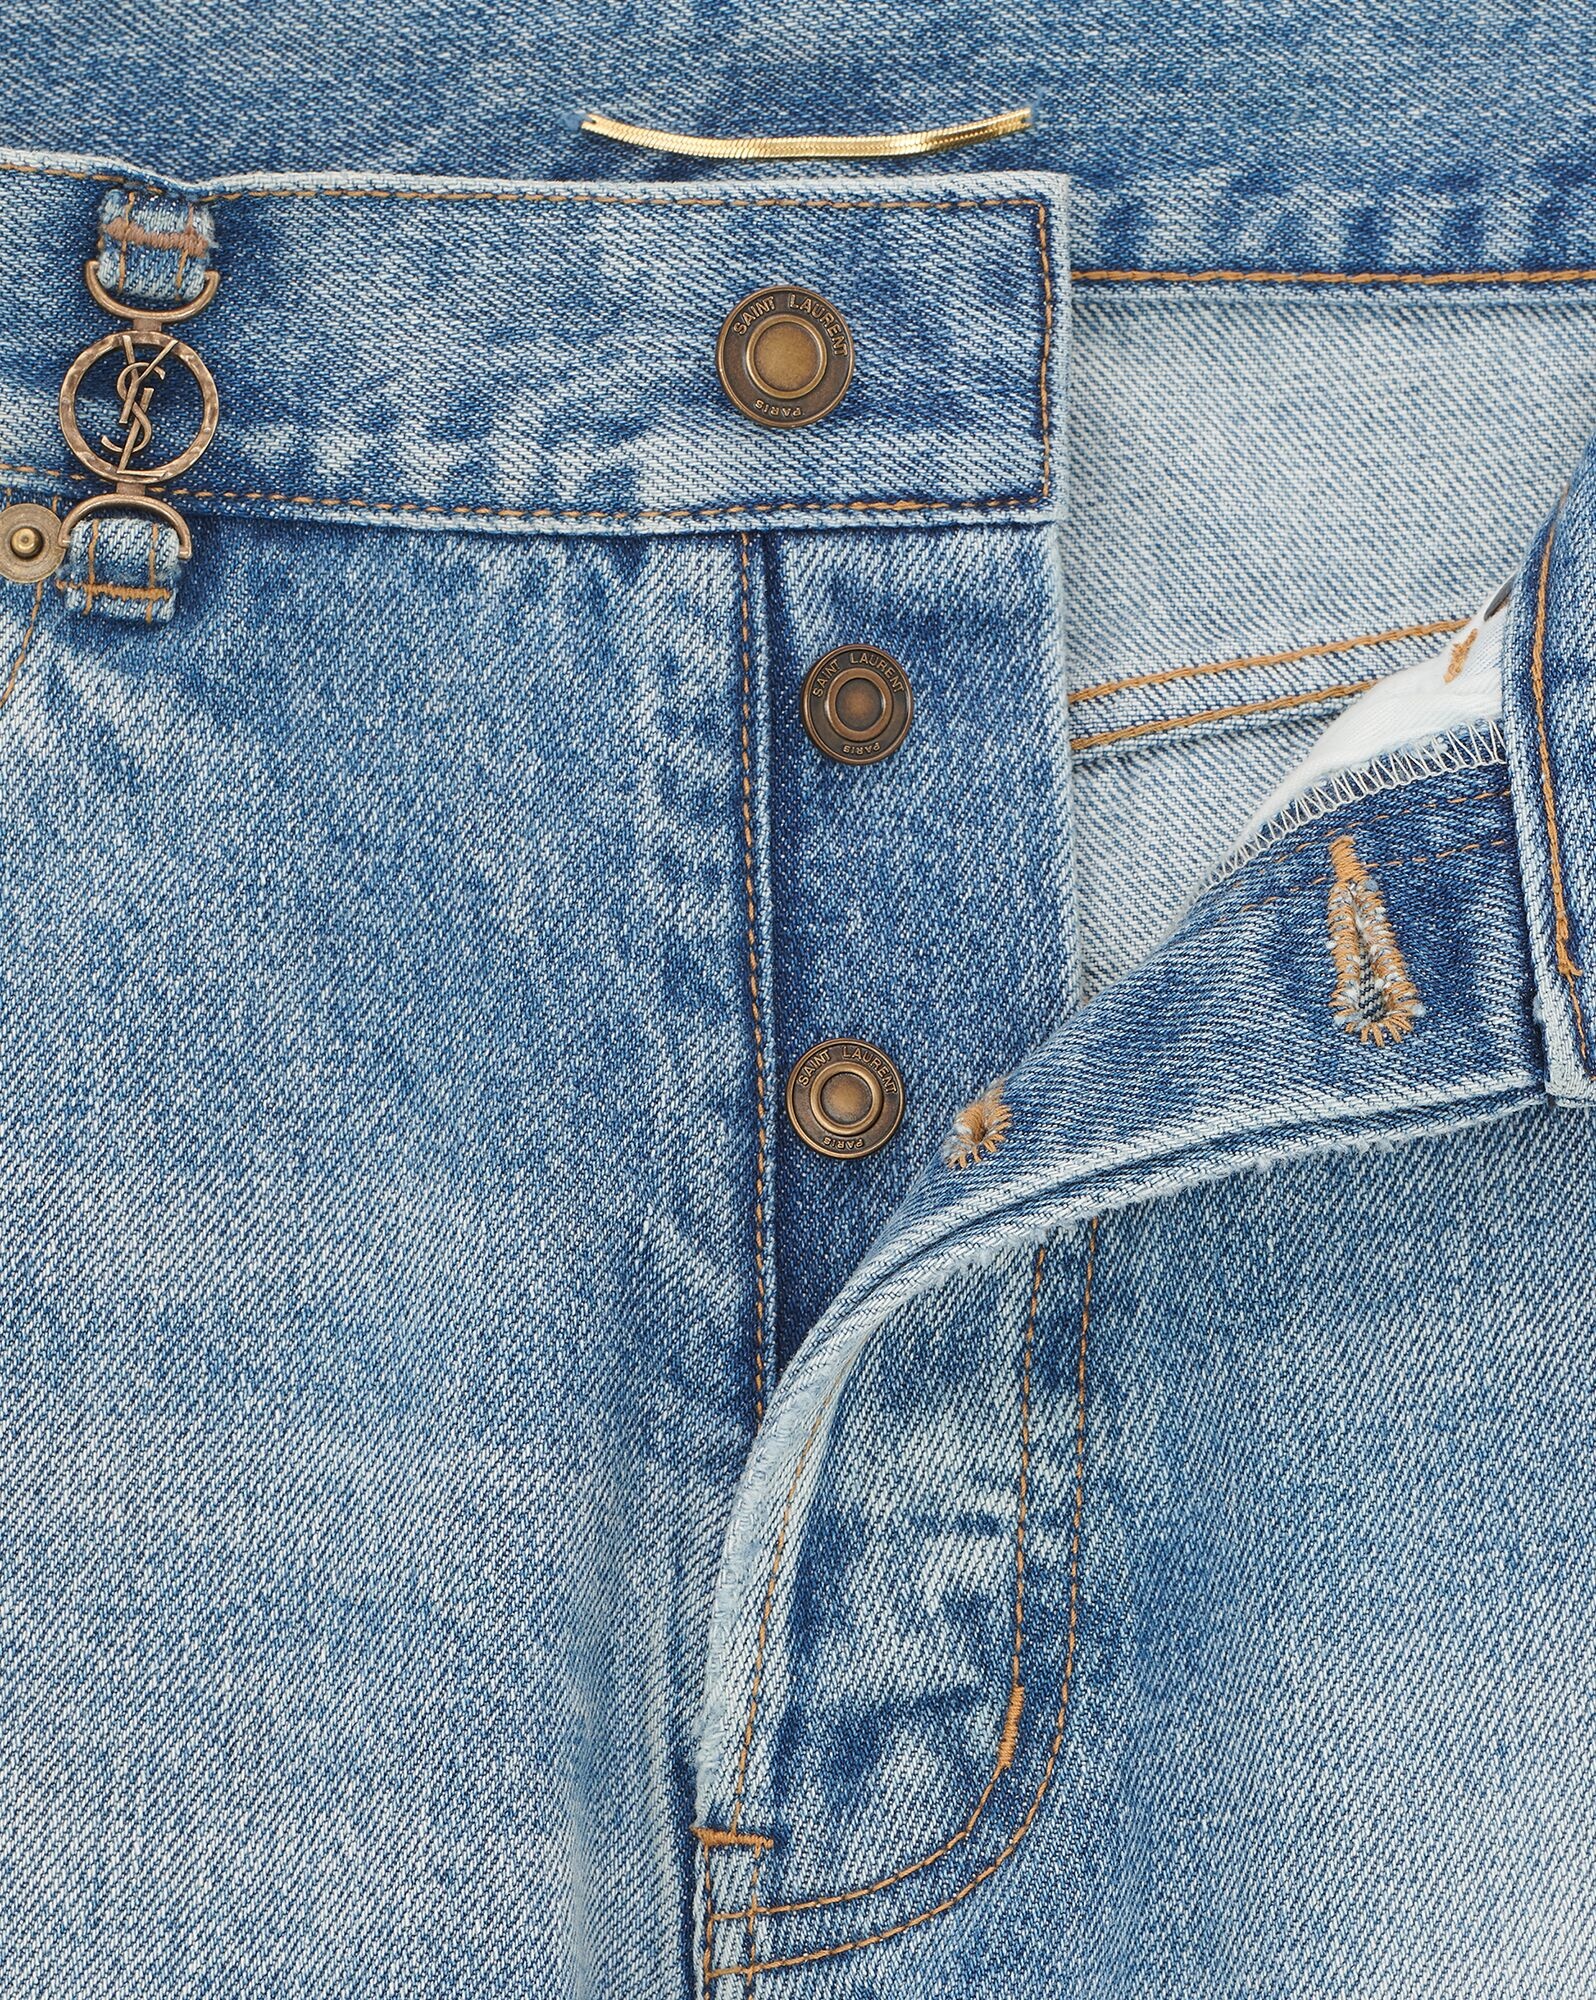 cassandre jeans in hawaii blue denim - 3